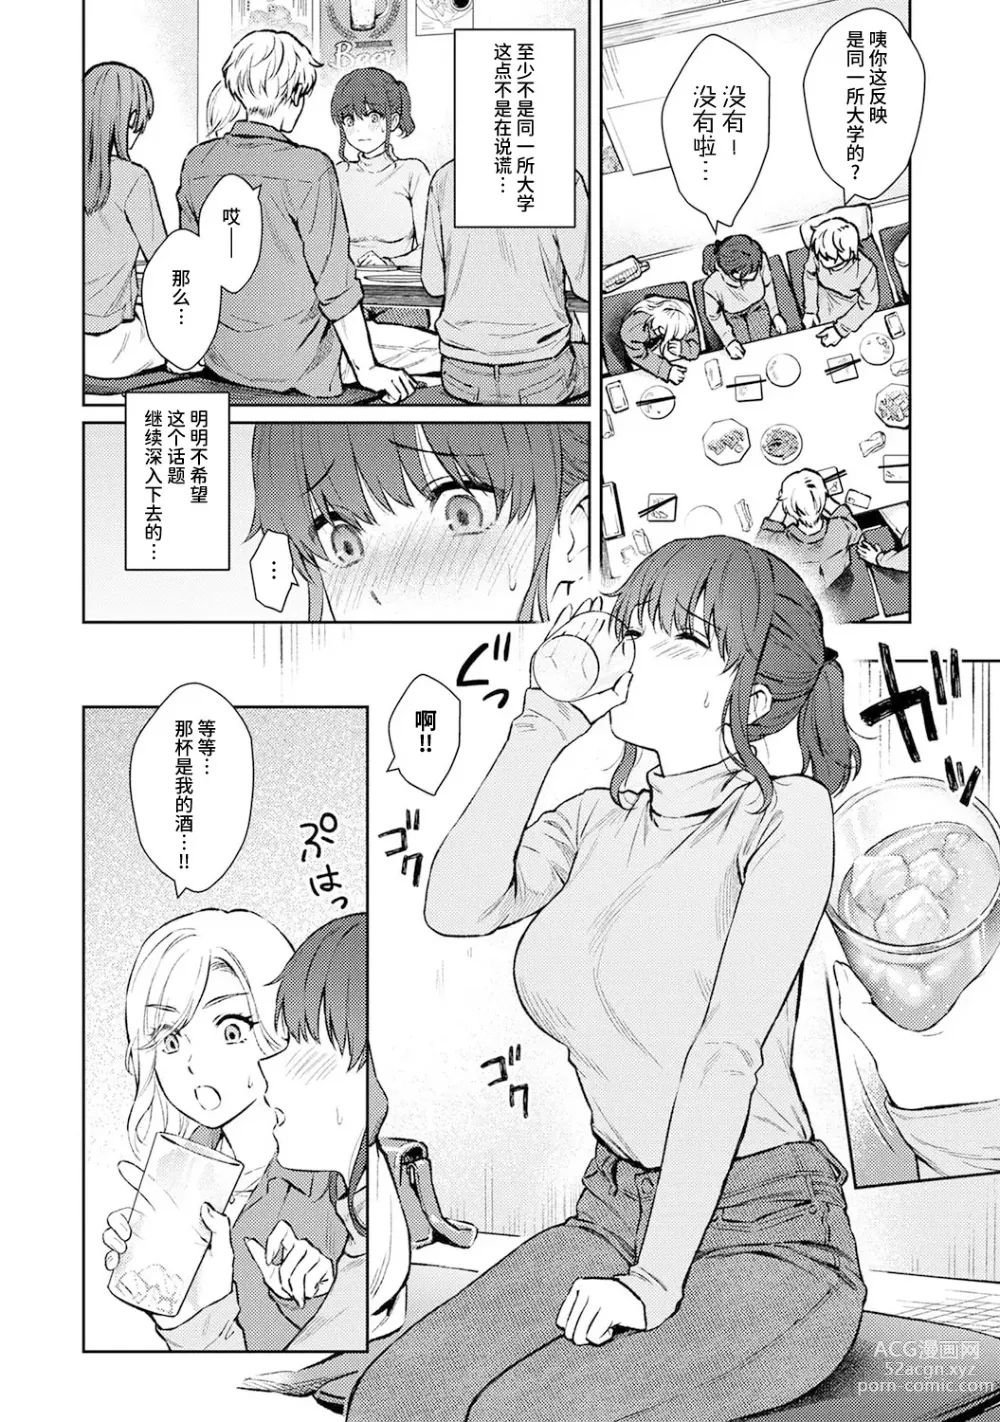 Page 3 of manga Sensei to Boku Ch. 13